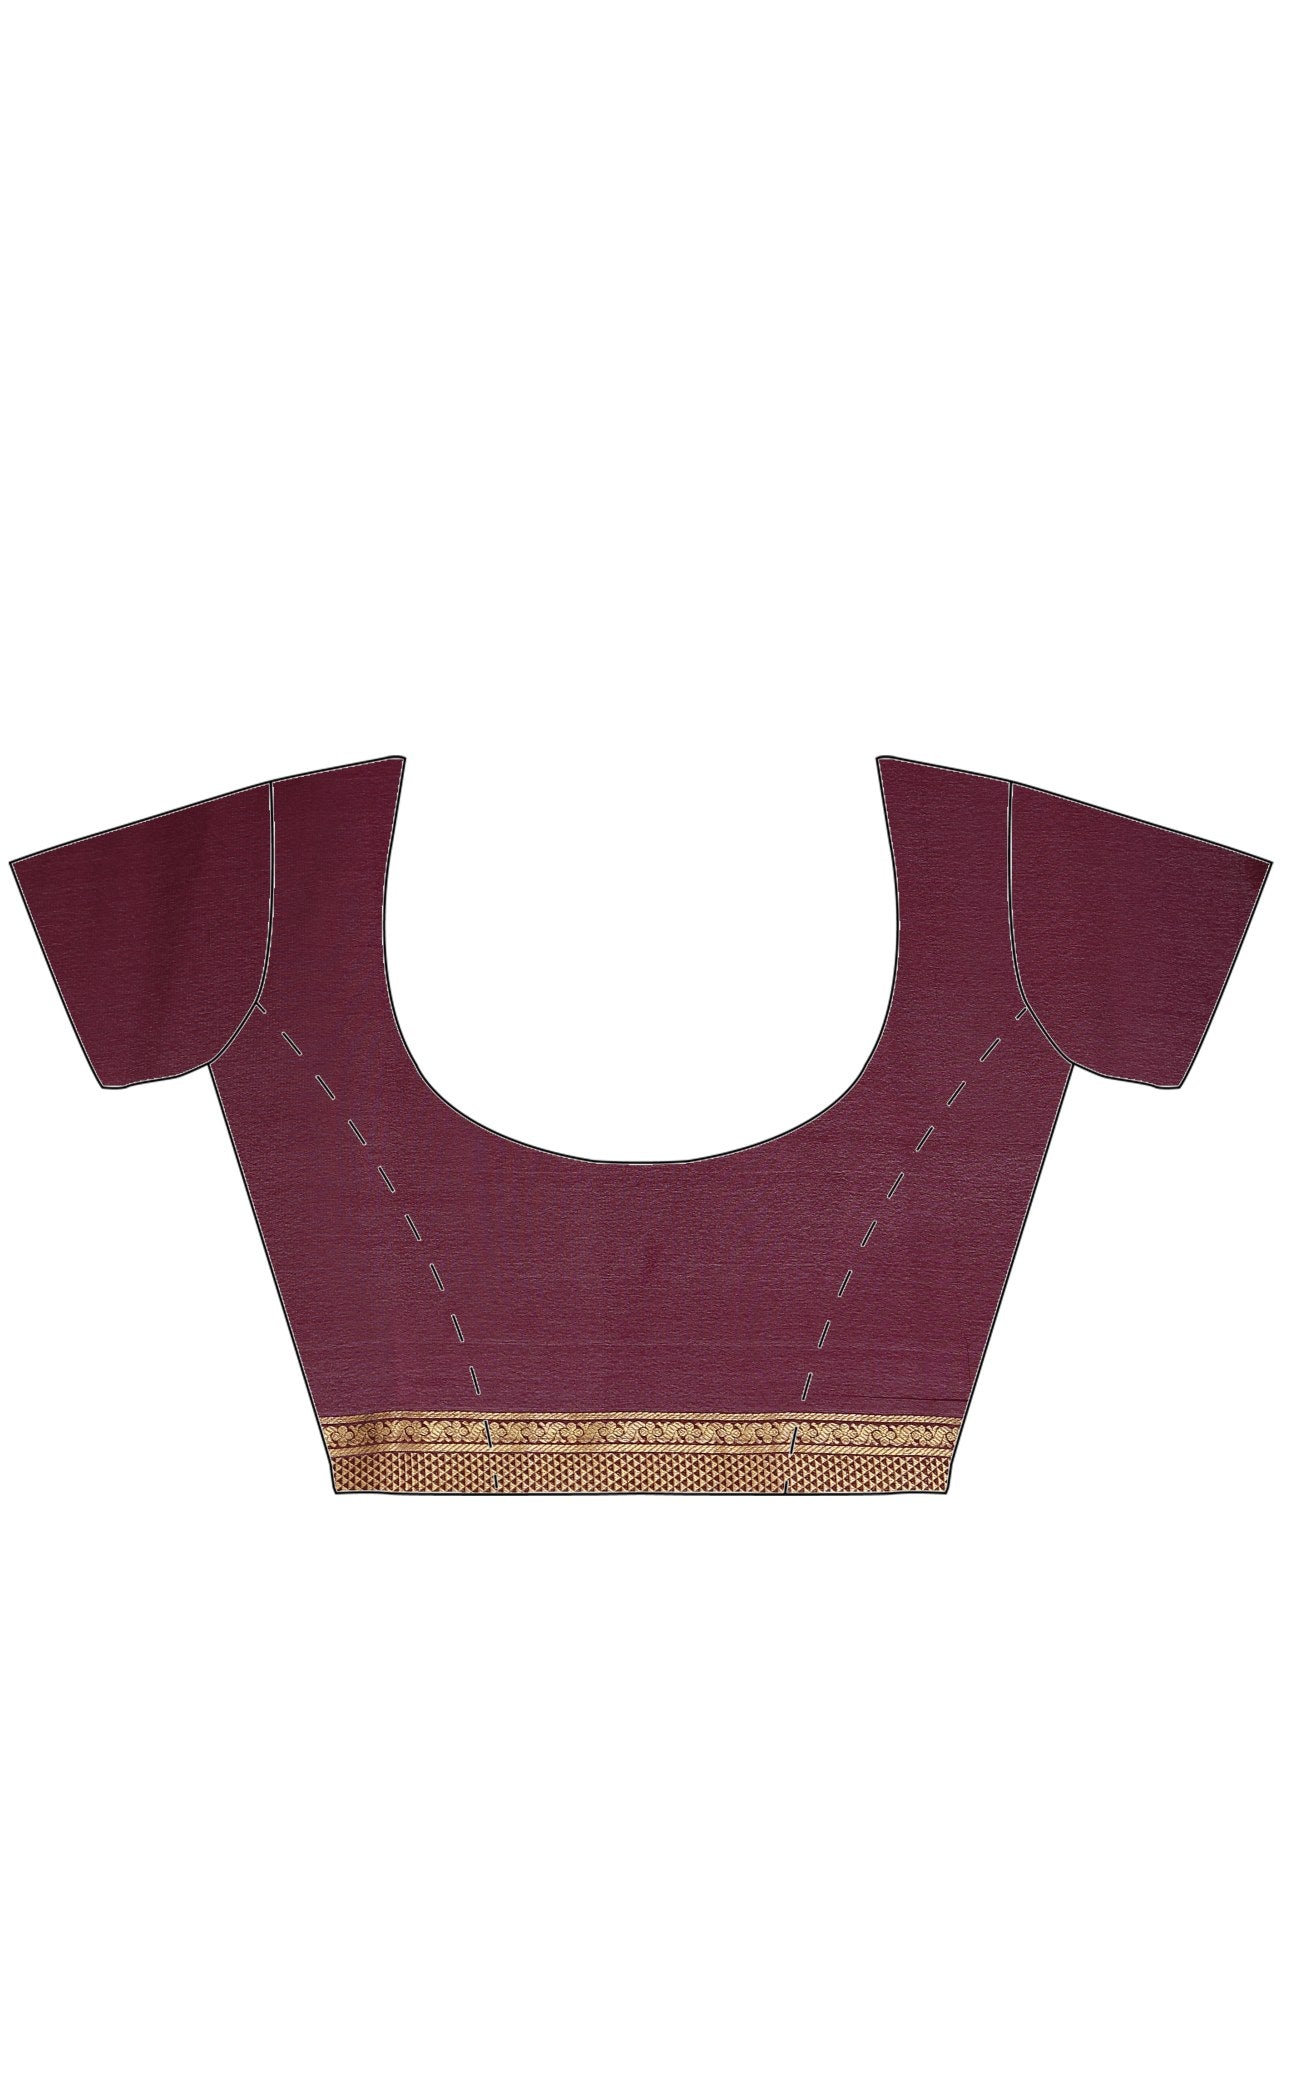 MYSORE SILK SAREES,Wonderful Pure Mysore silk saree,Crepe Fabric,SUDARSHAN SILKS,Self Design patterns